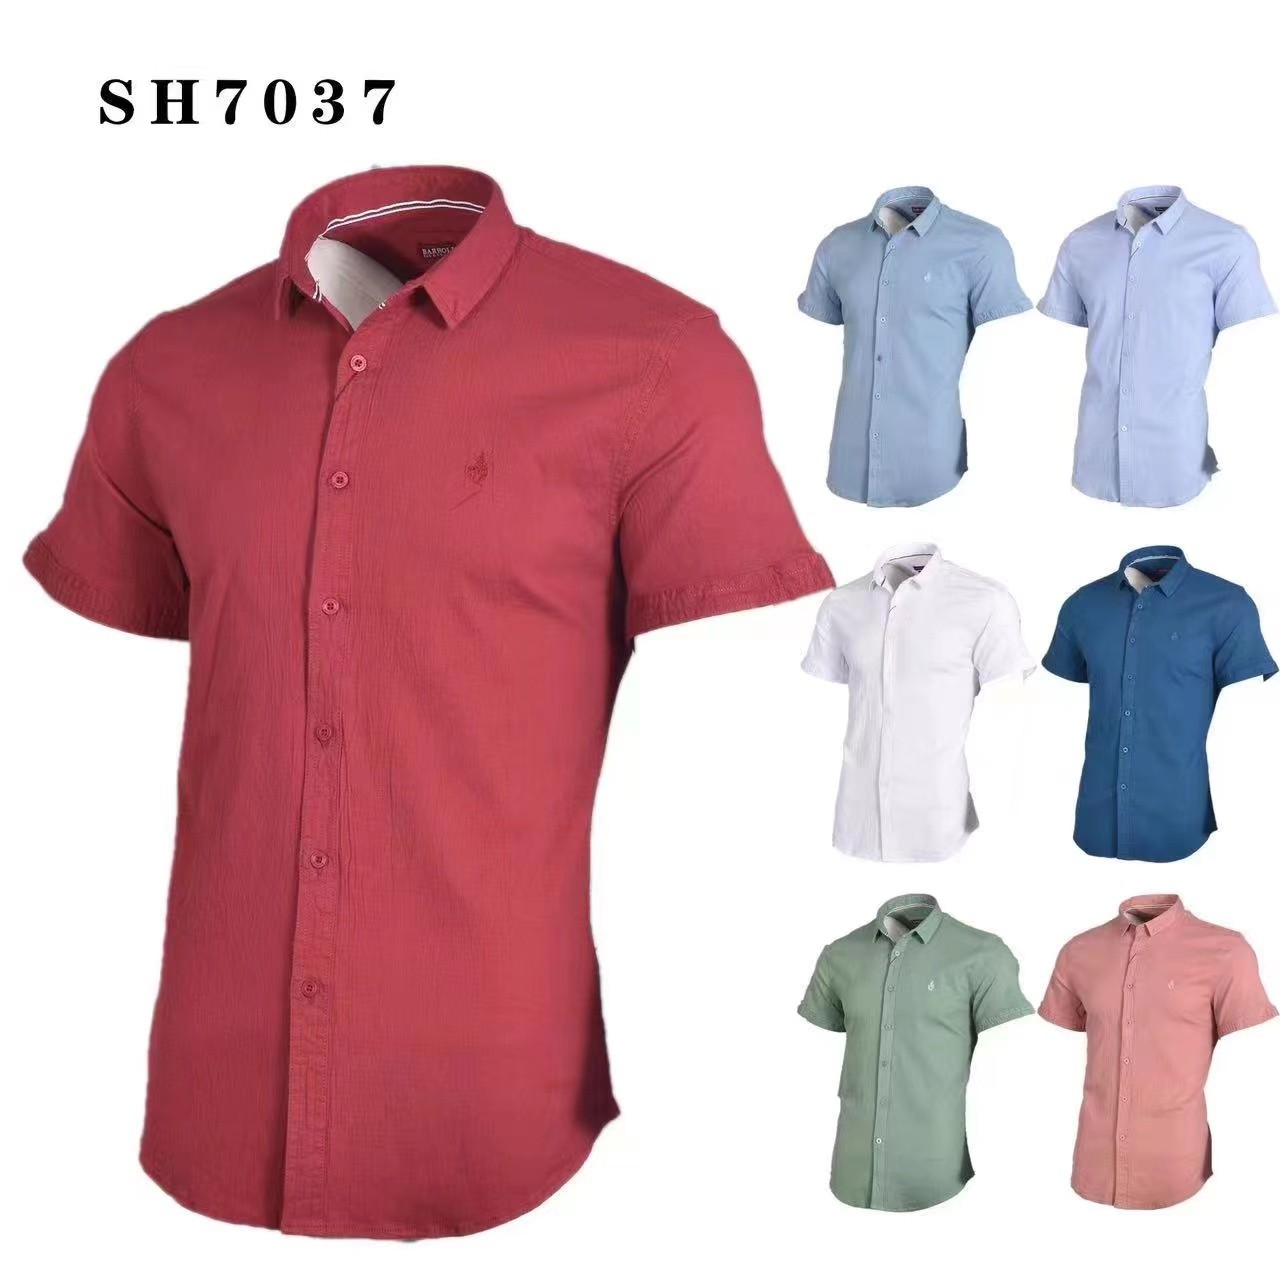 Men's Short Sleeve Plain Shirt